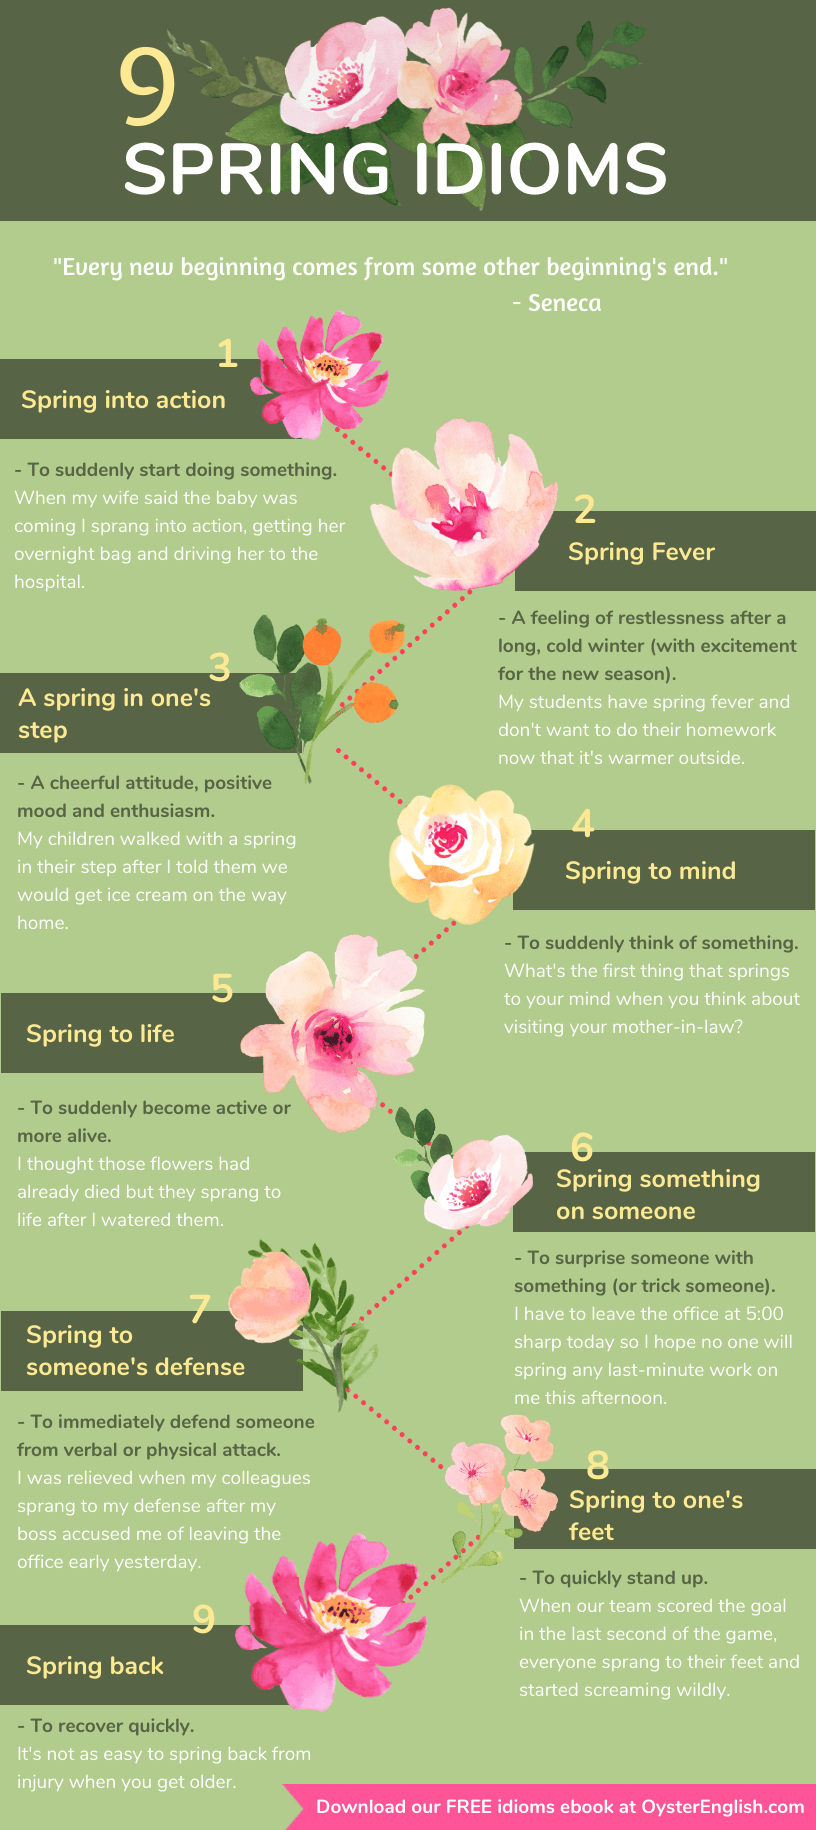 9 Important Spring Idioms